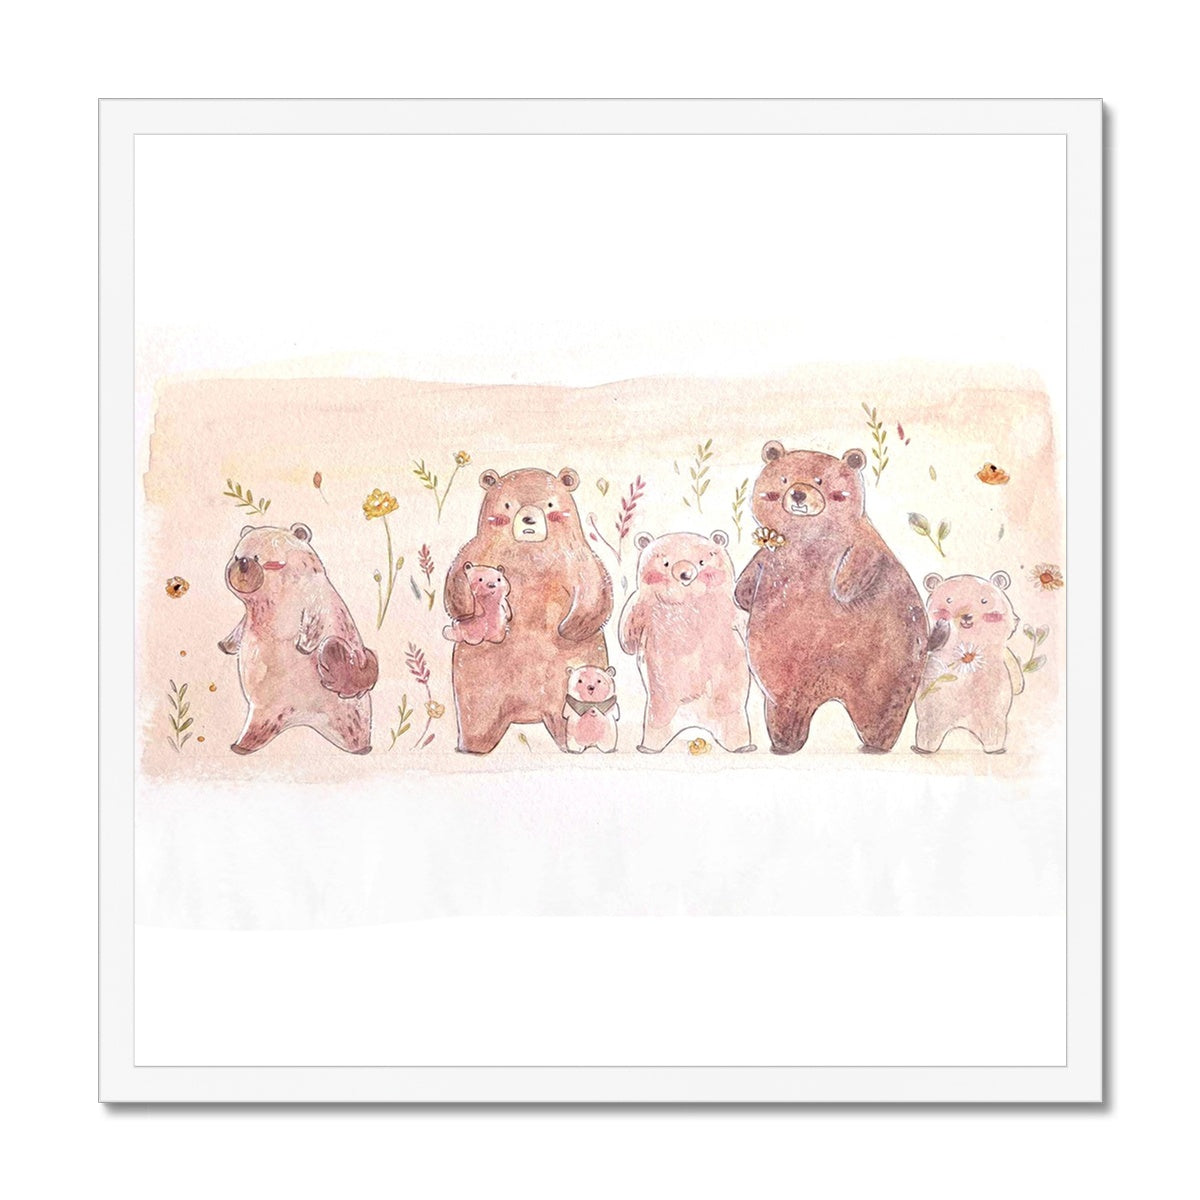 Bear hug Framed Print